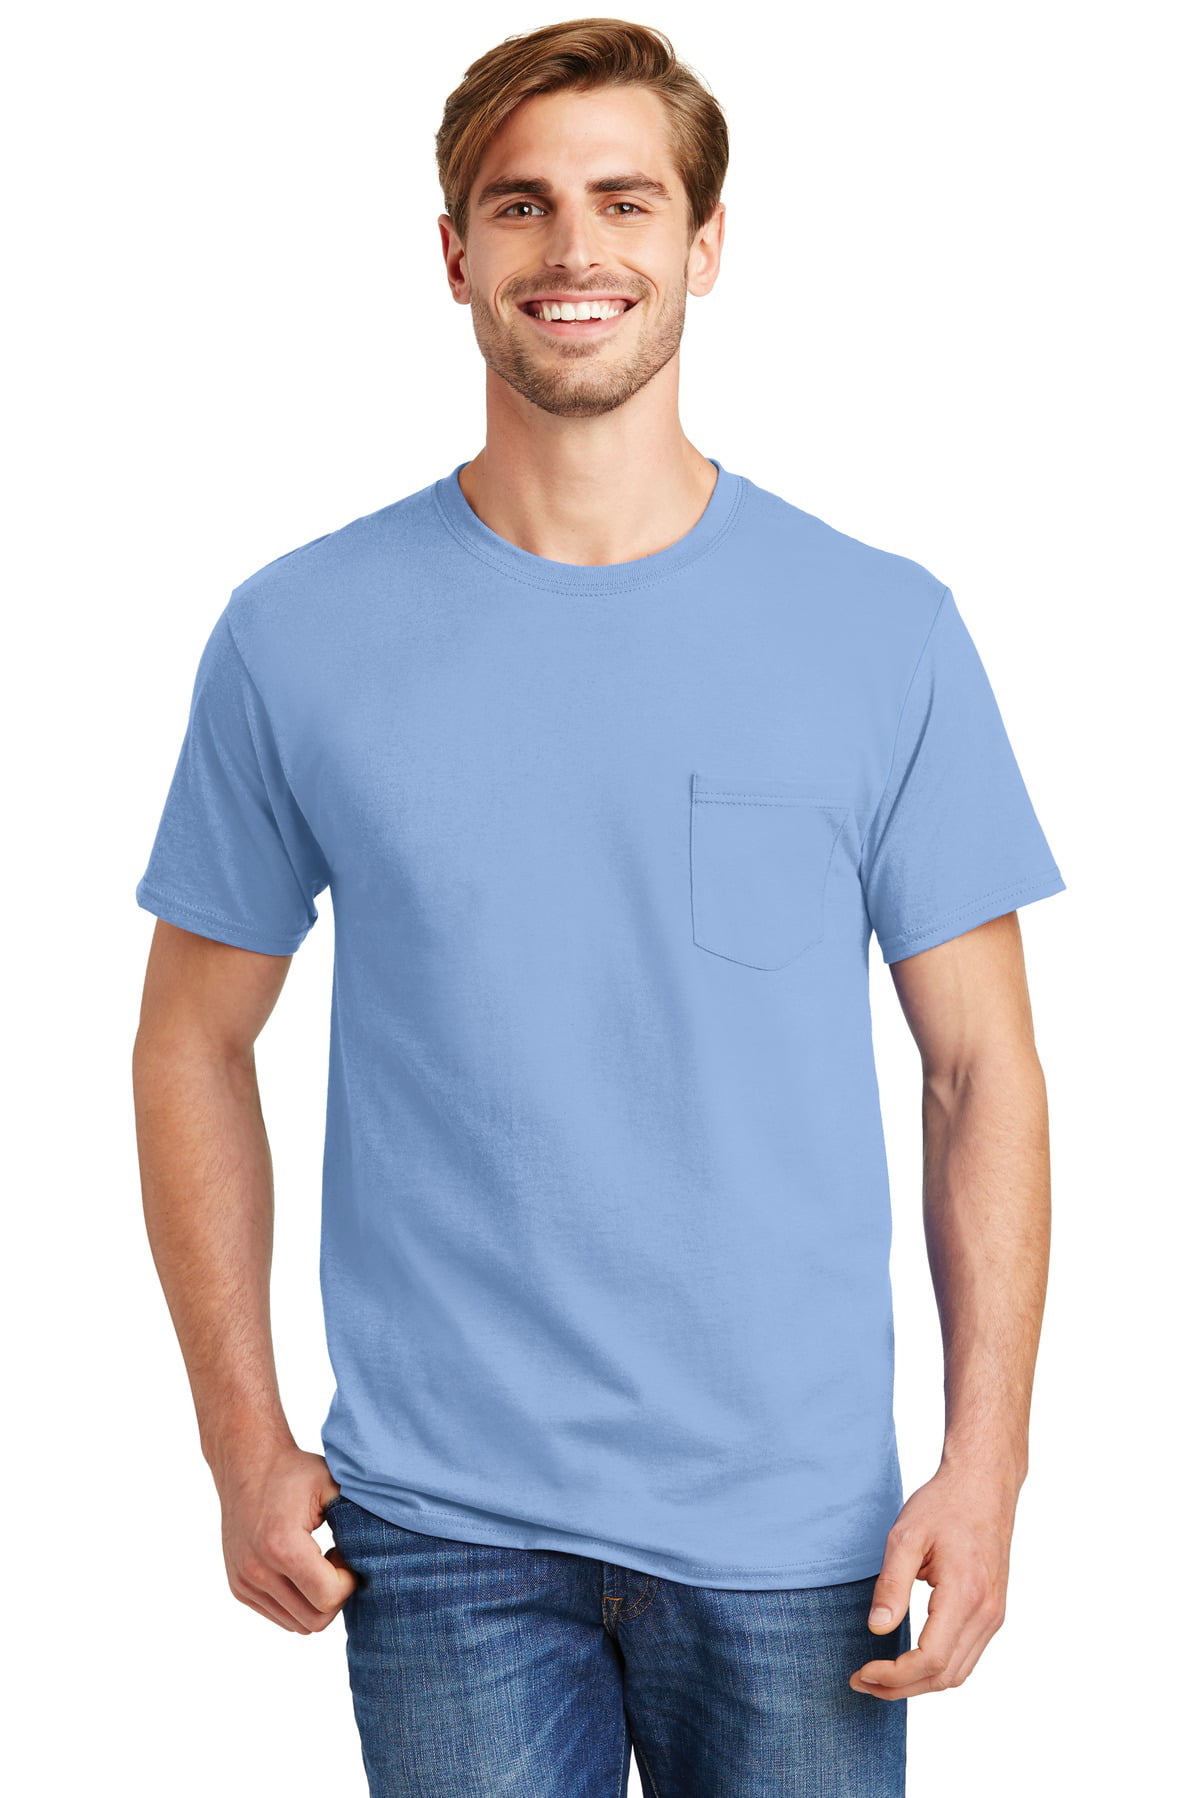 Hanes Tagless 100% Cotton T-Shirt with Pocket - Walmart.com